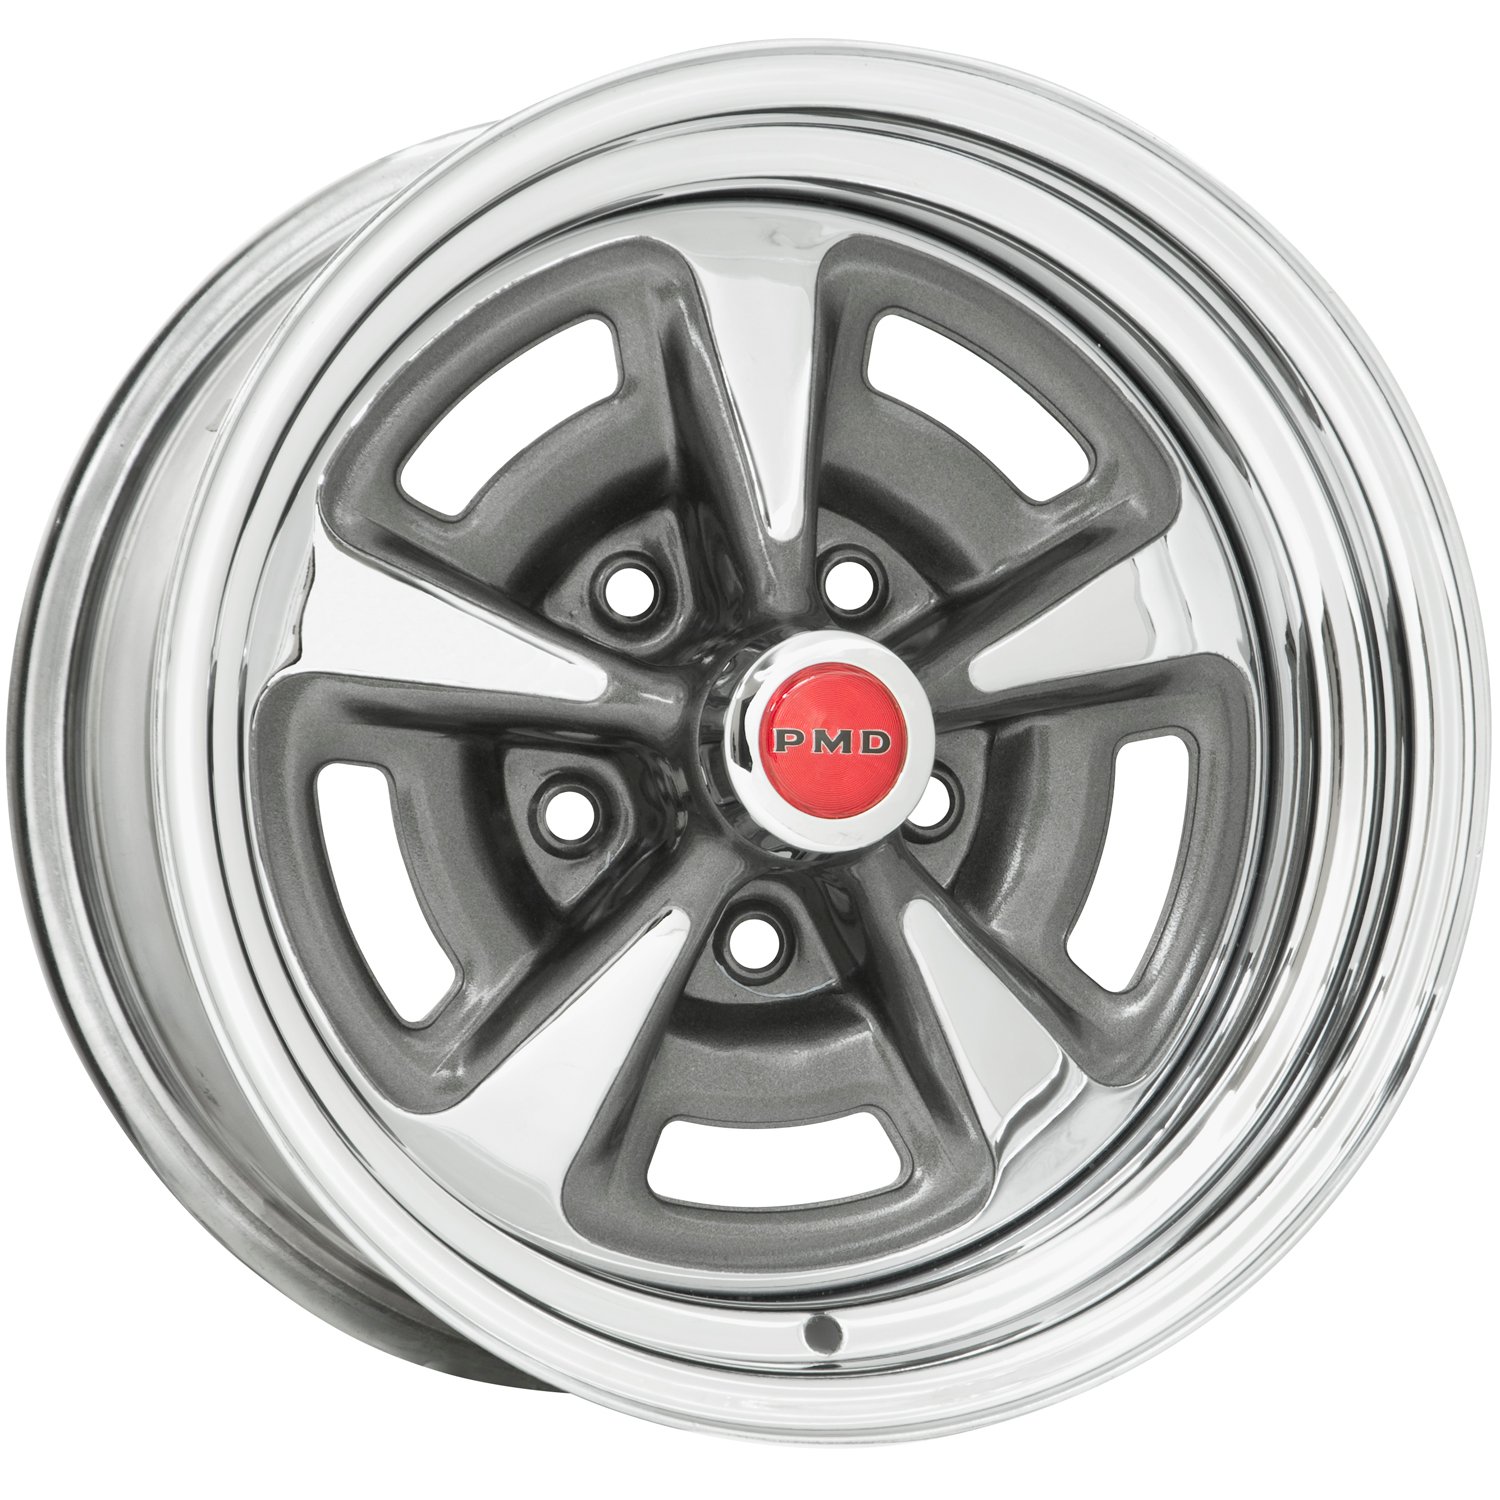 60-573404-C 60-Series Pontiac Rallye II Wheel [Size: 15" x 7"] Chrome Finish